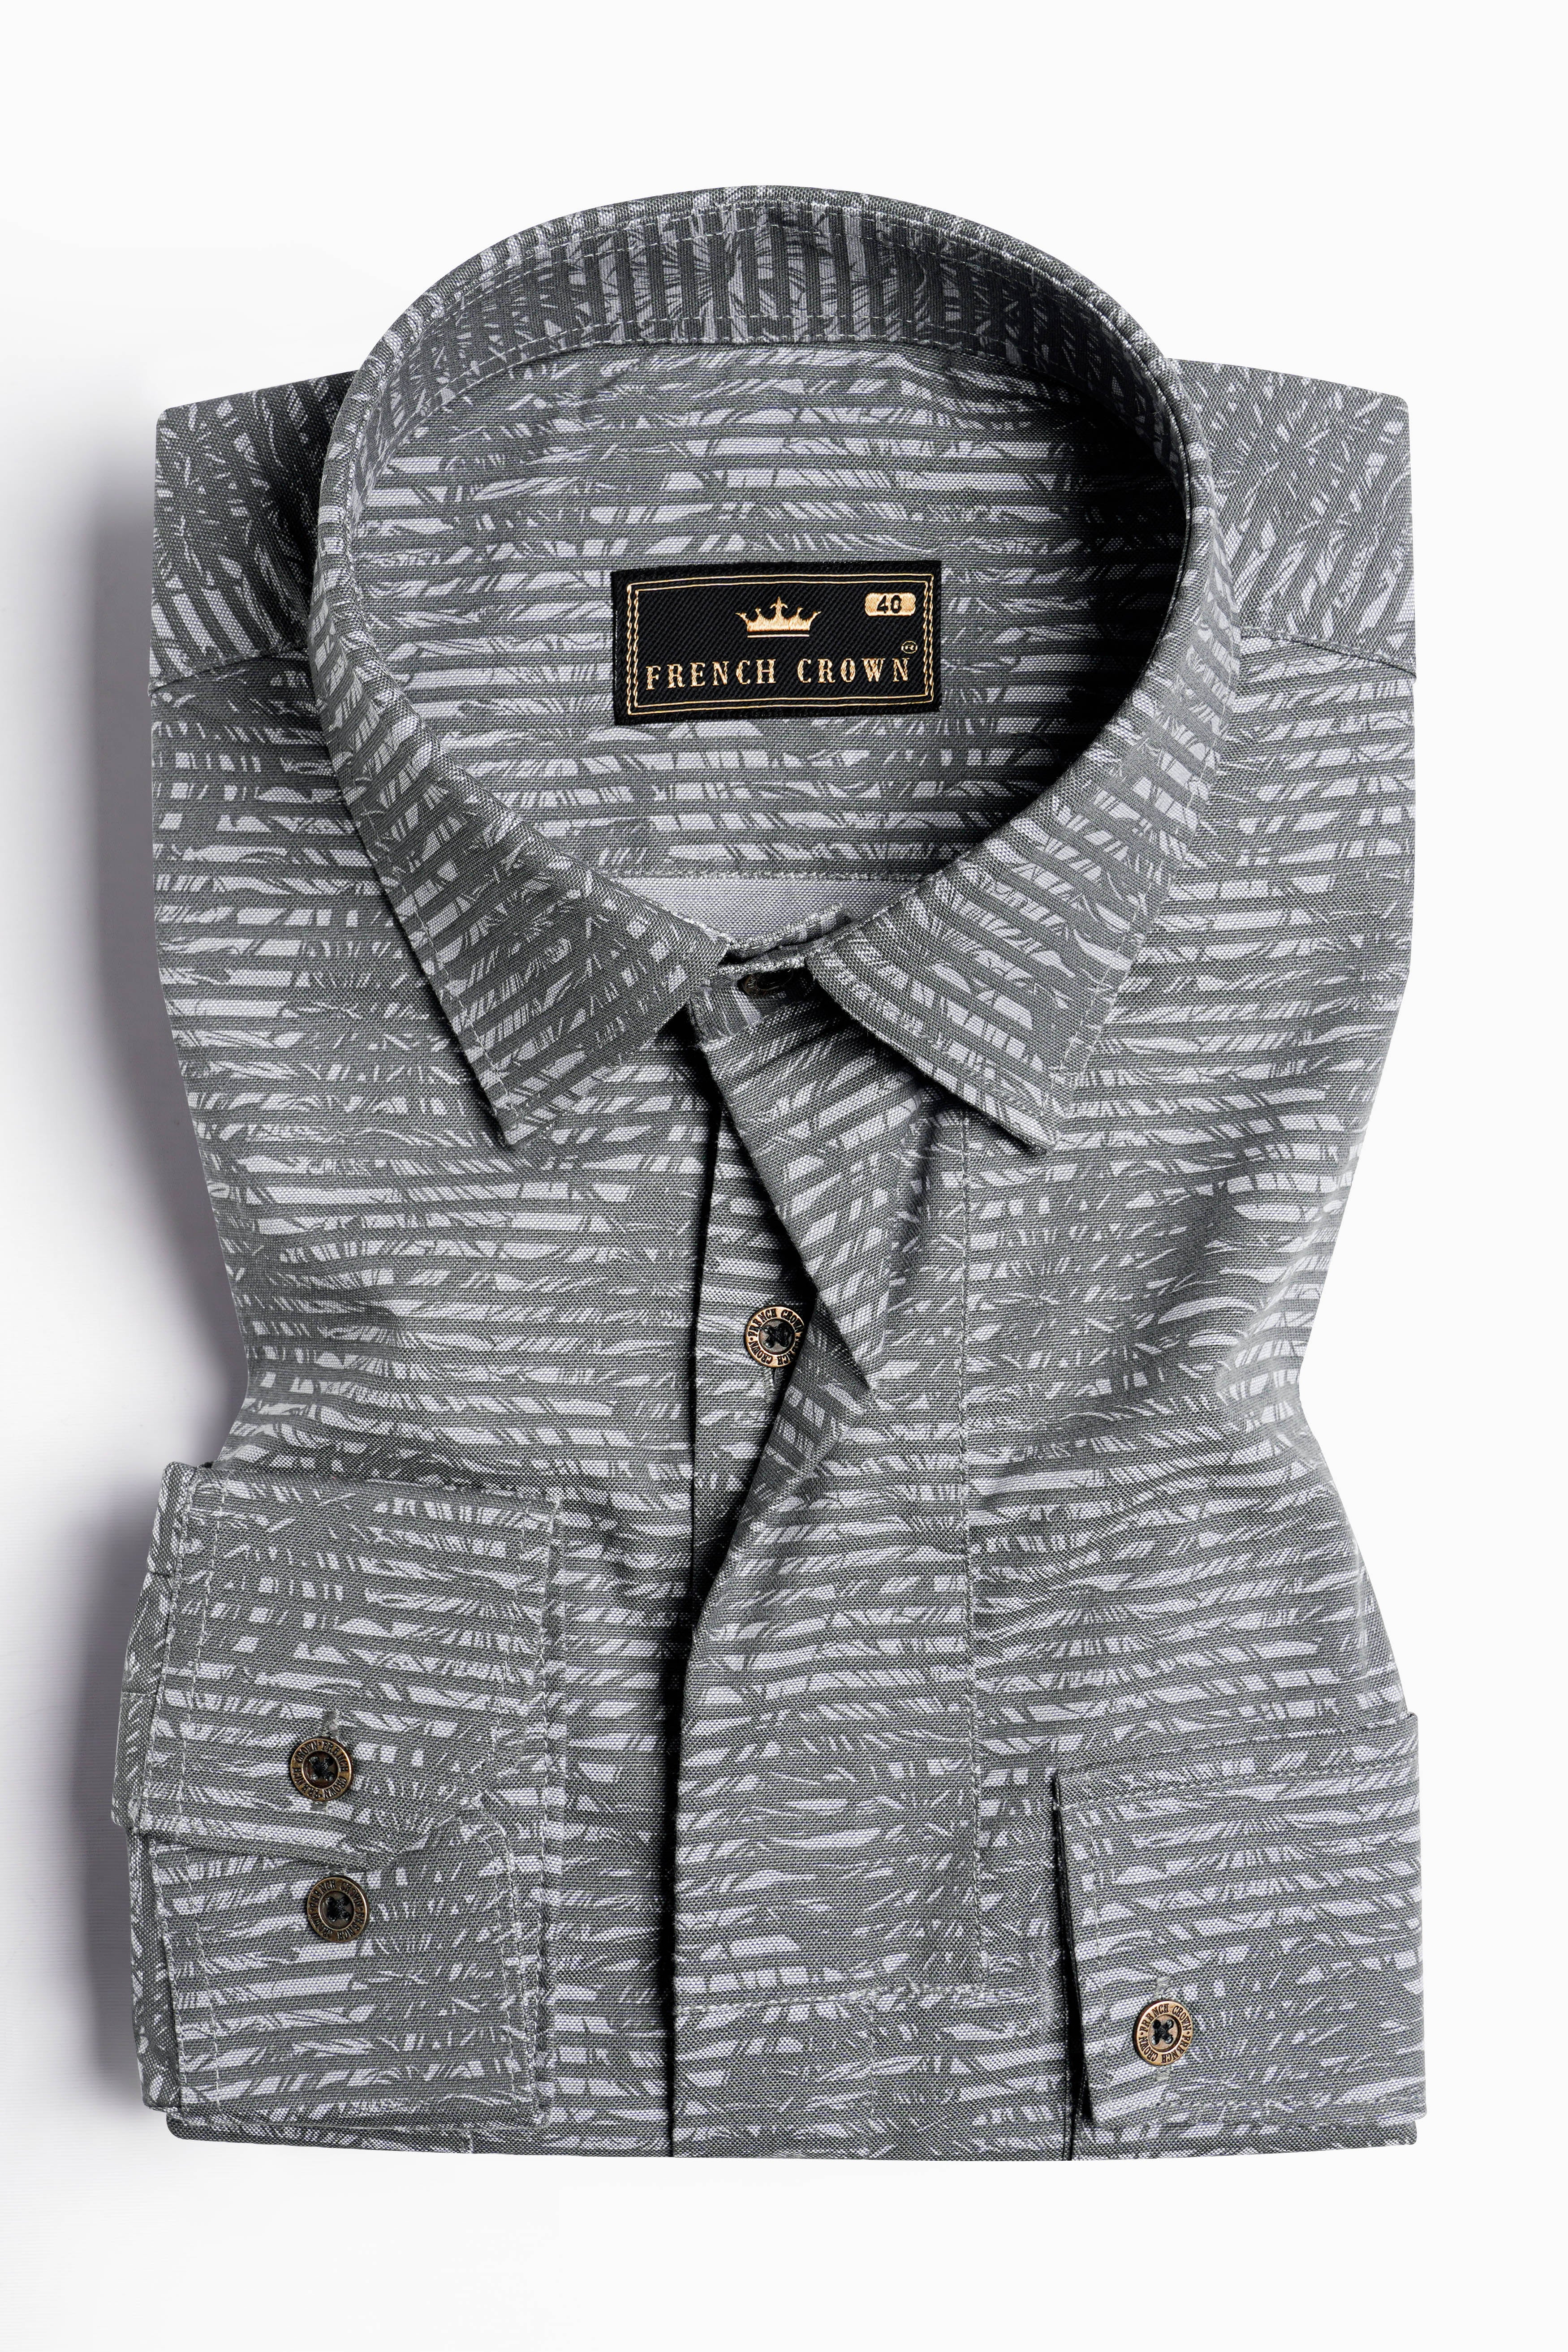 Arsenic Gray Textured Royal Oxford Designer Shirt